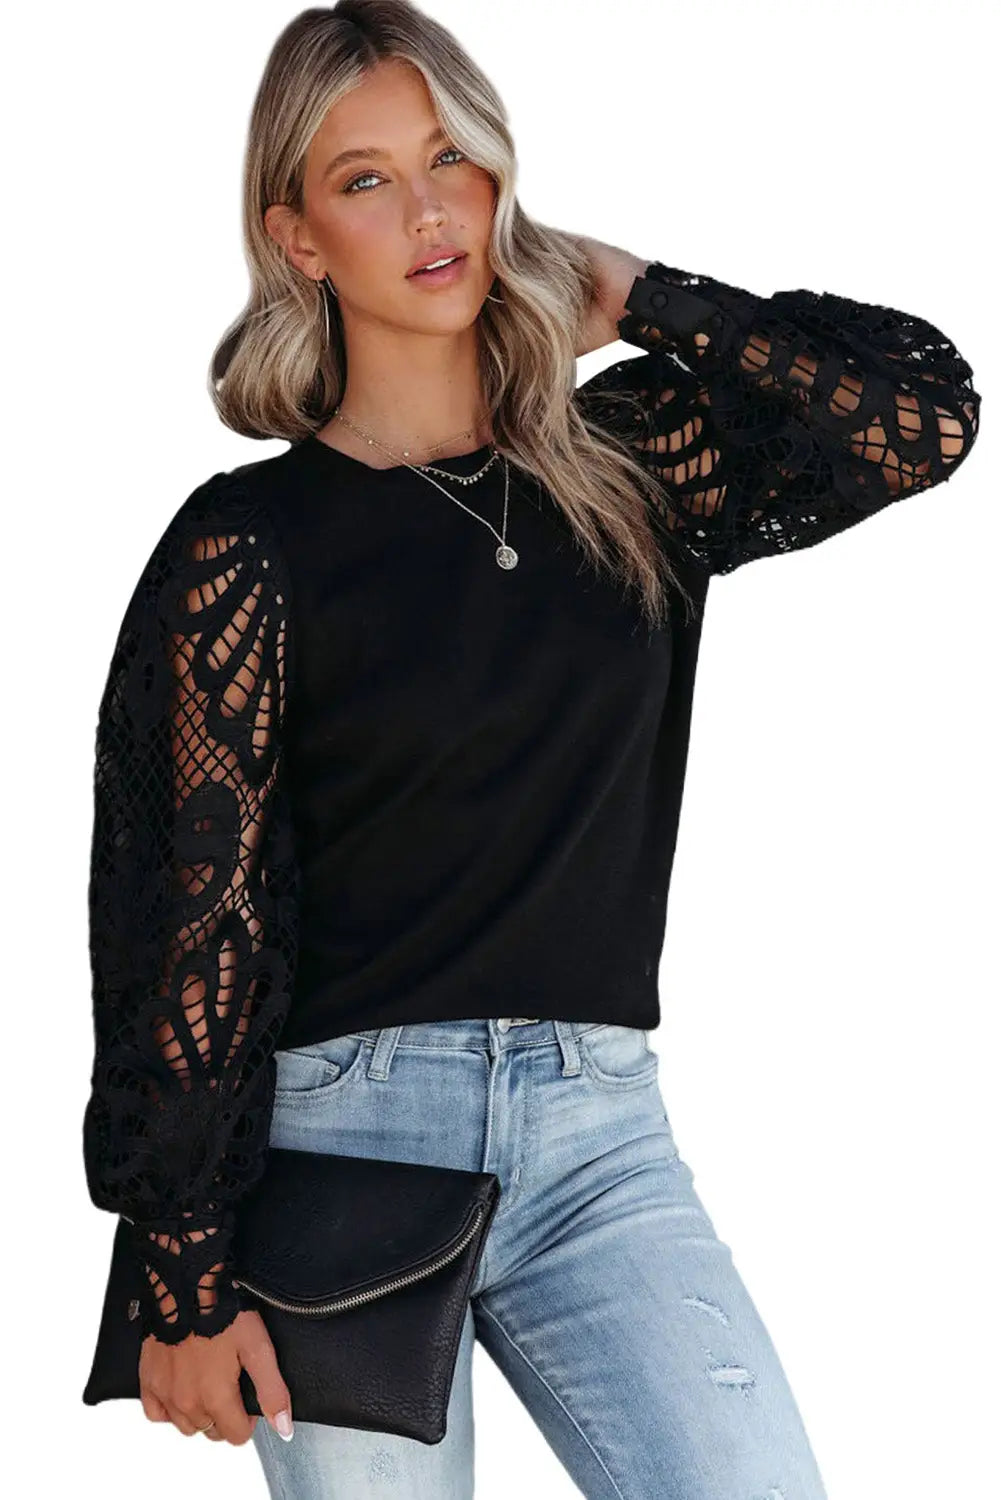 Black crochet sleeve crew neck blouse - tops